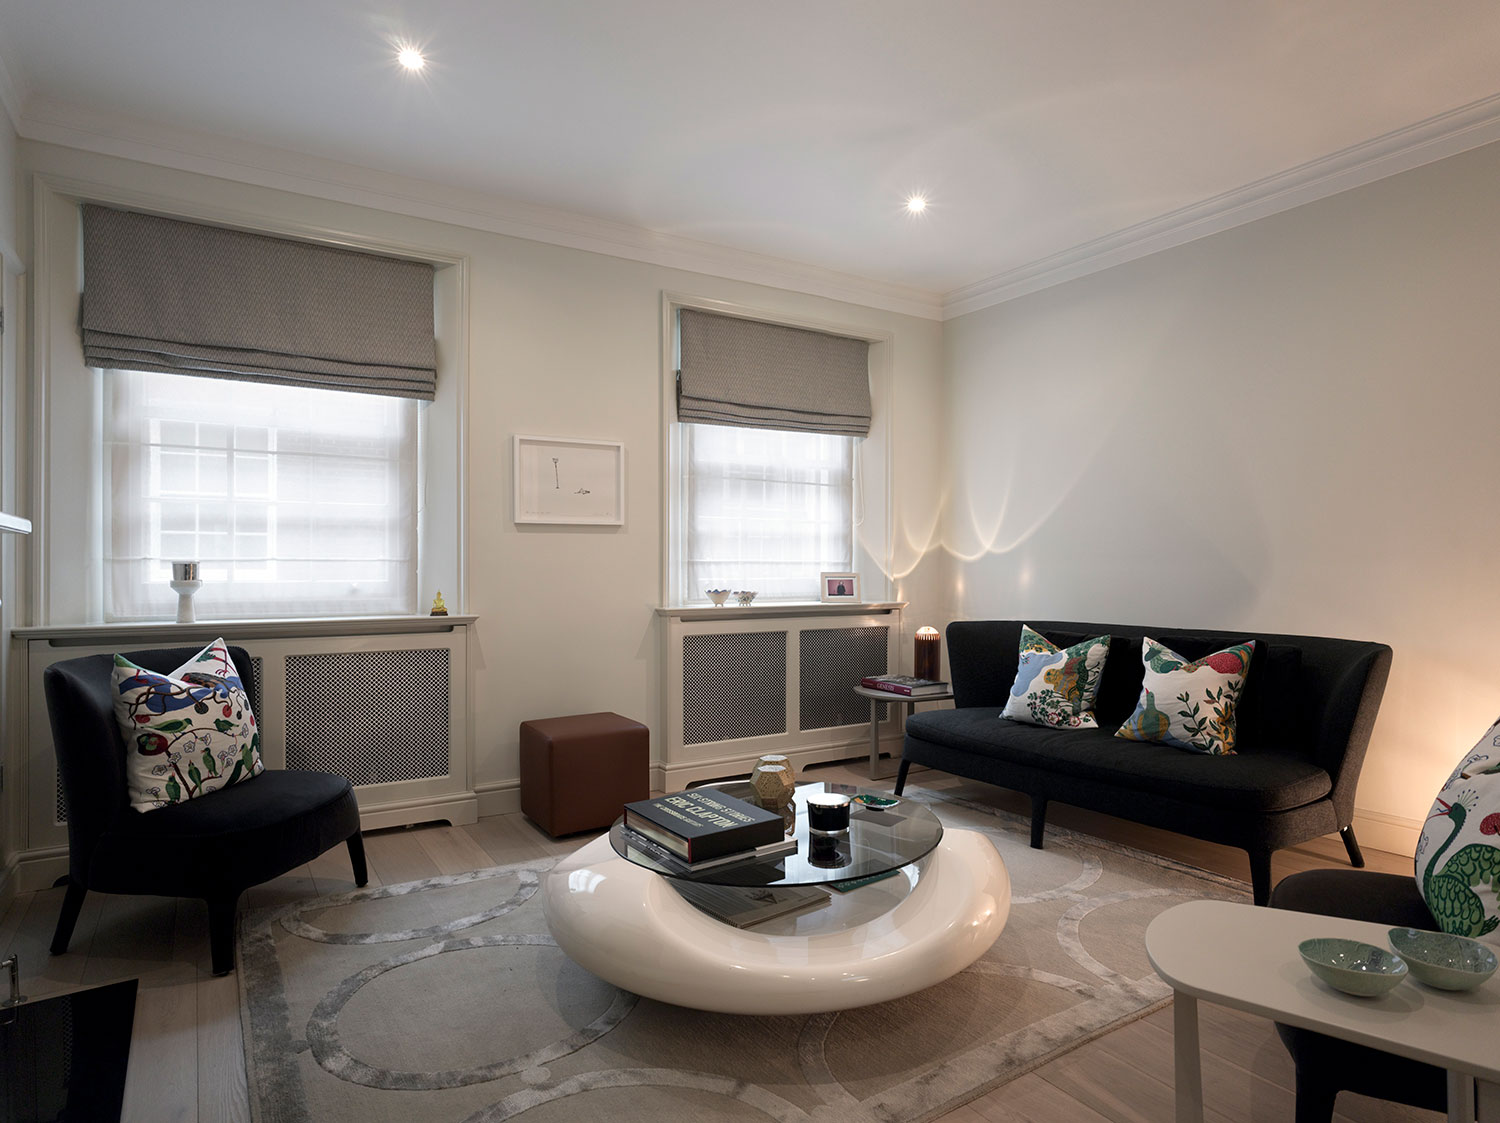 Bespoke living room interior design